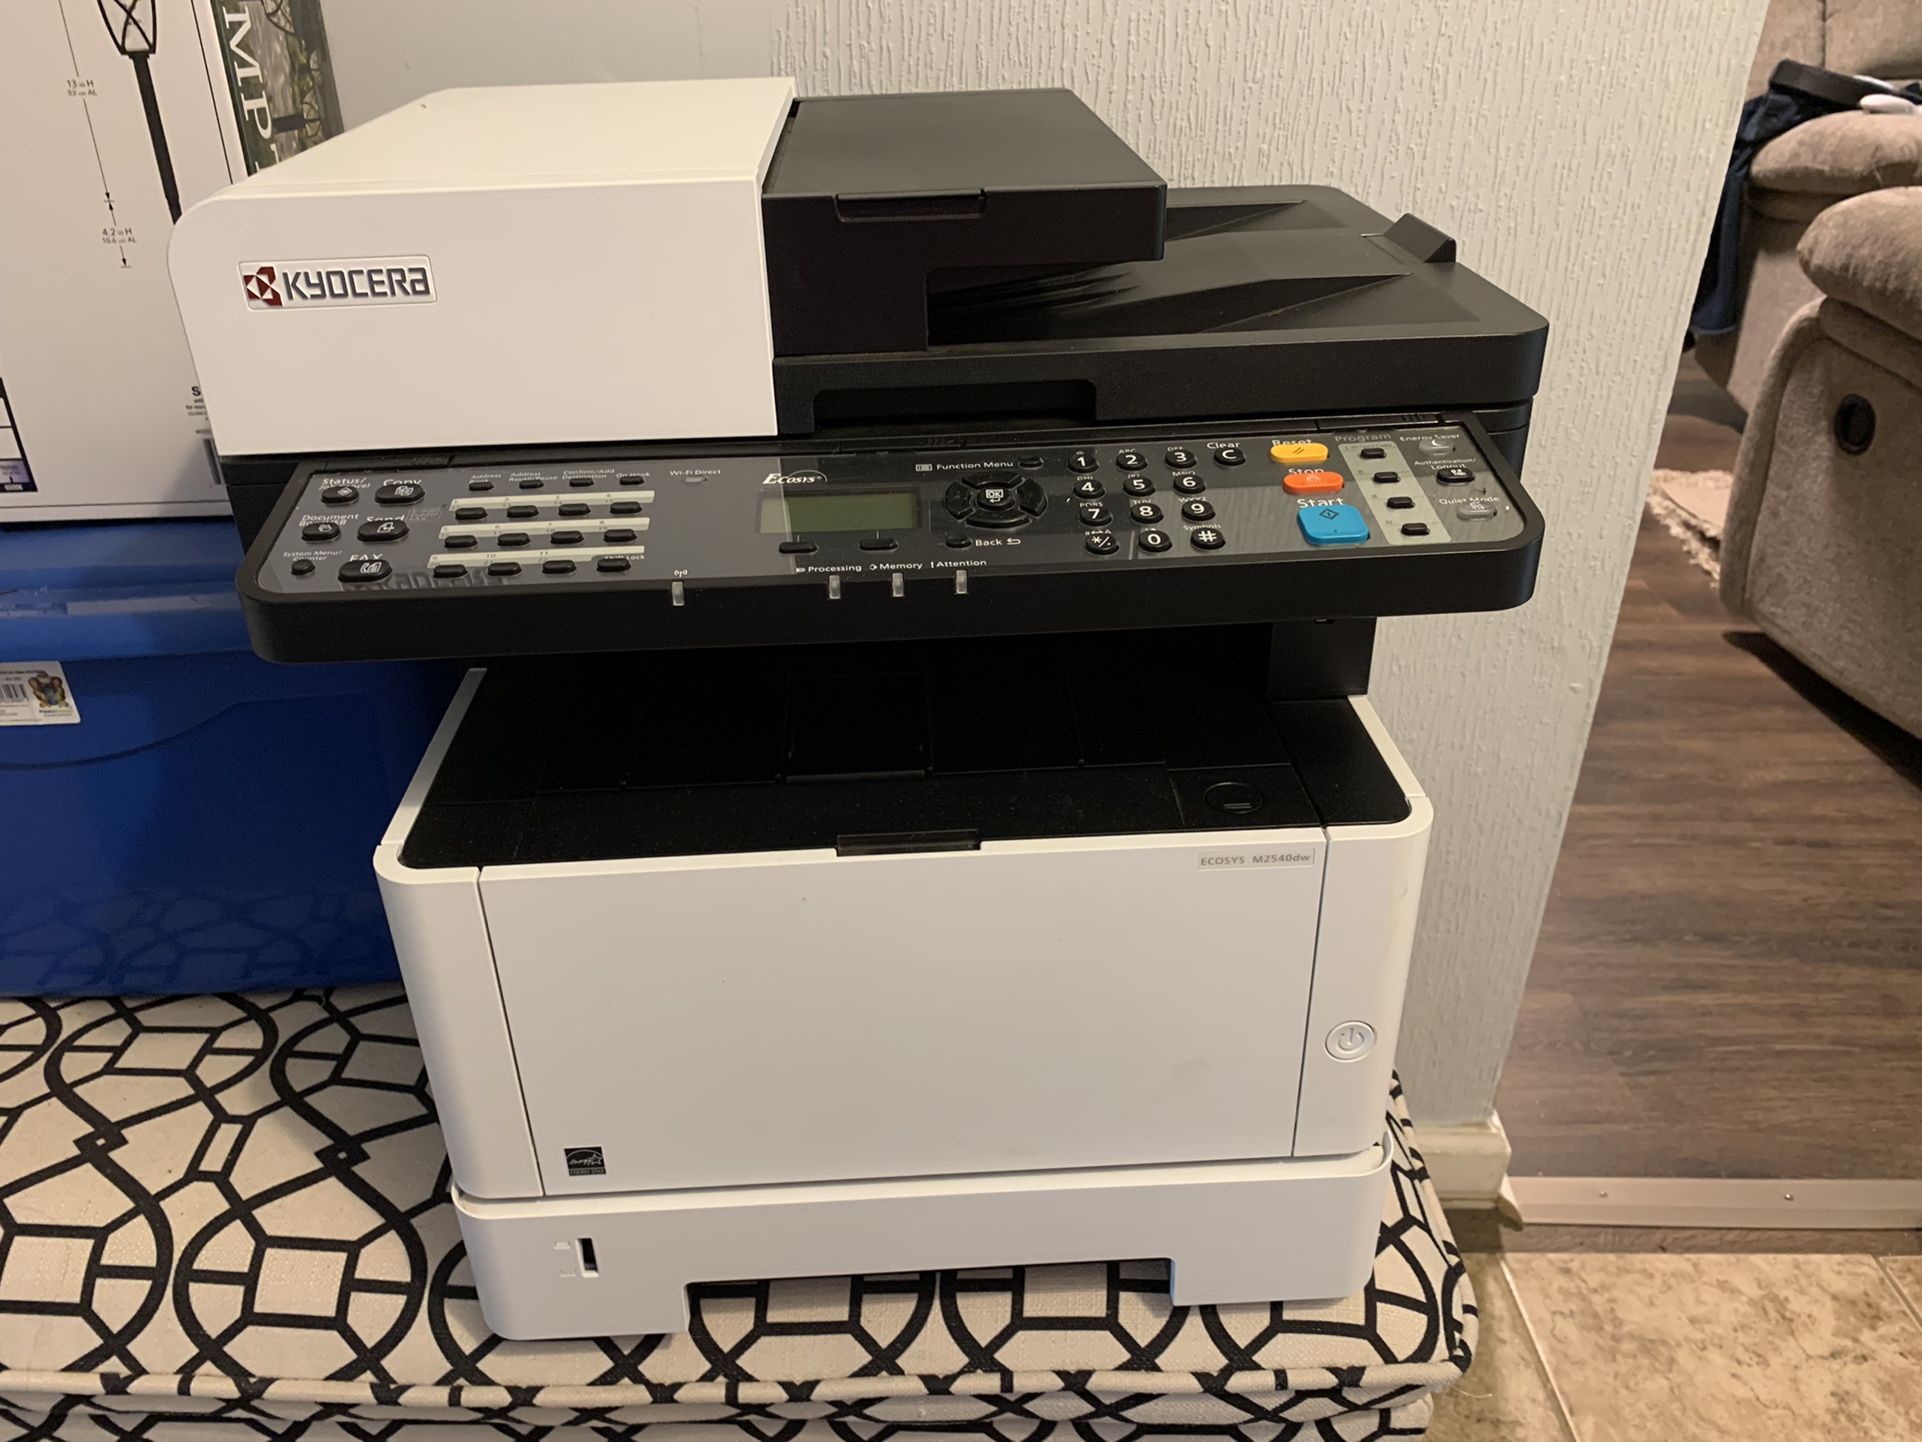 Kyocera  Printer 